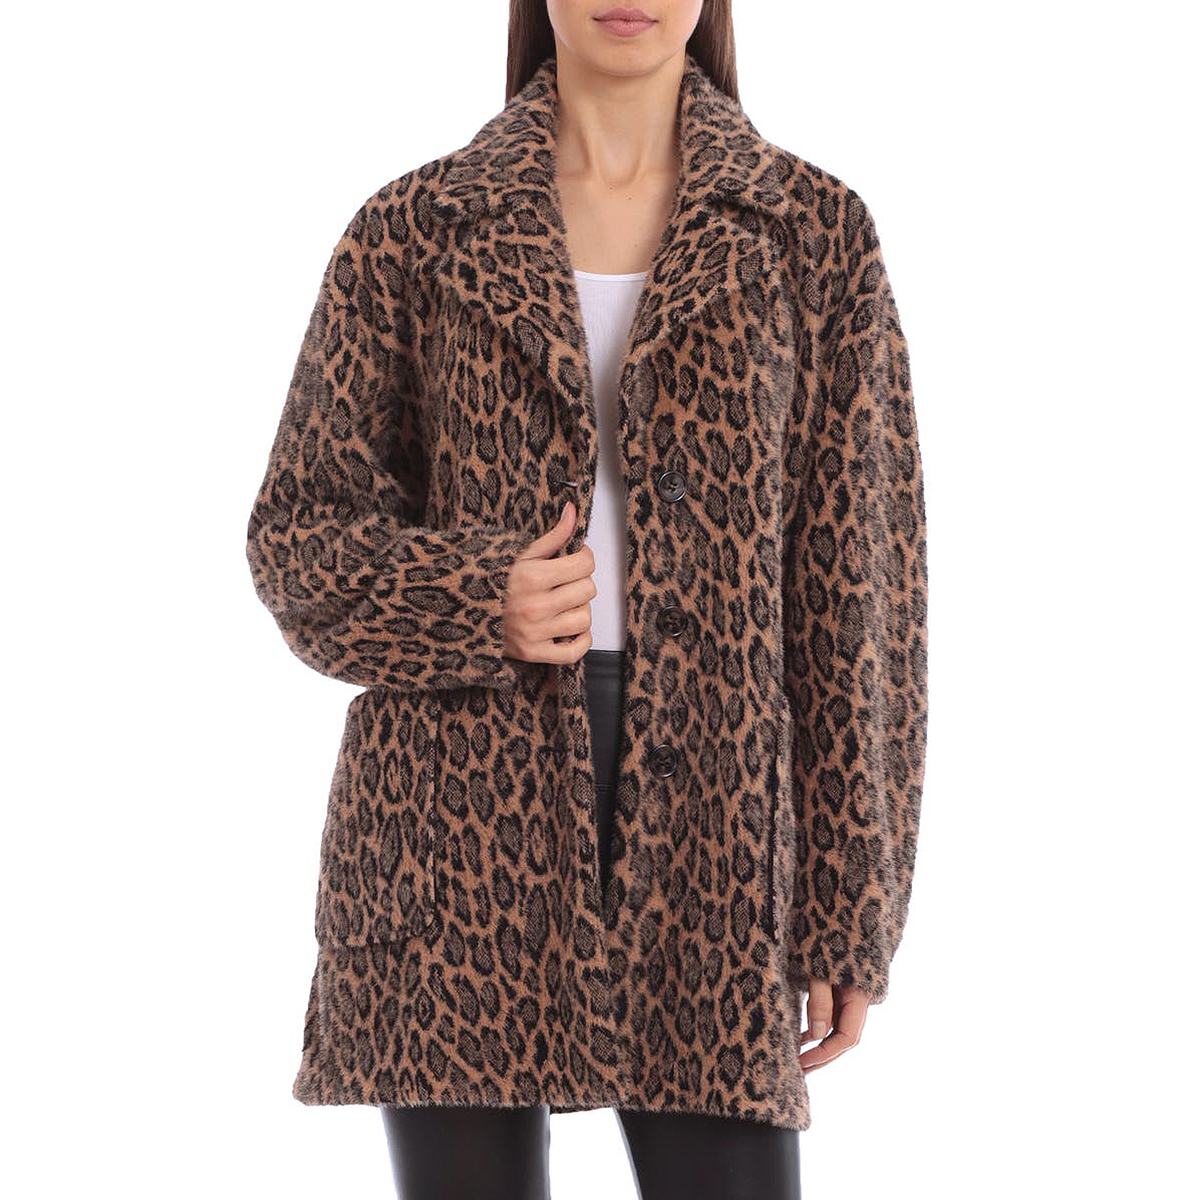 nordstrom-half-yearly-sale-leopard-coat